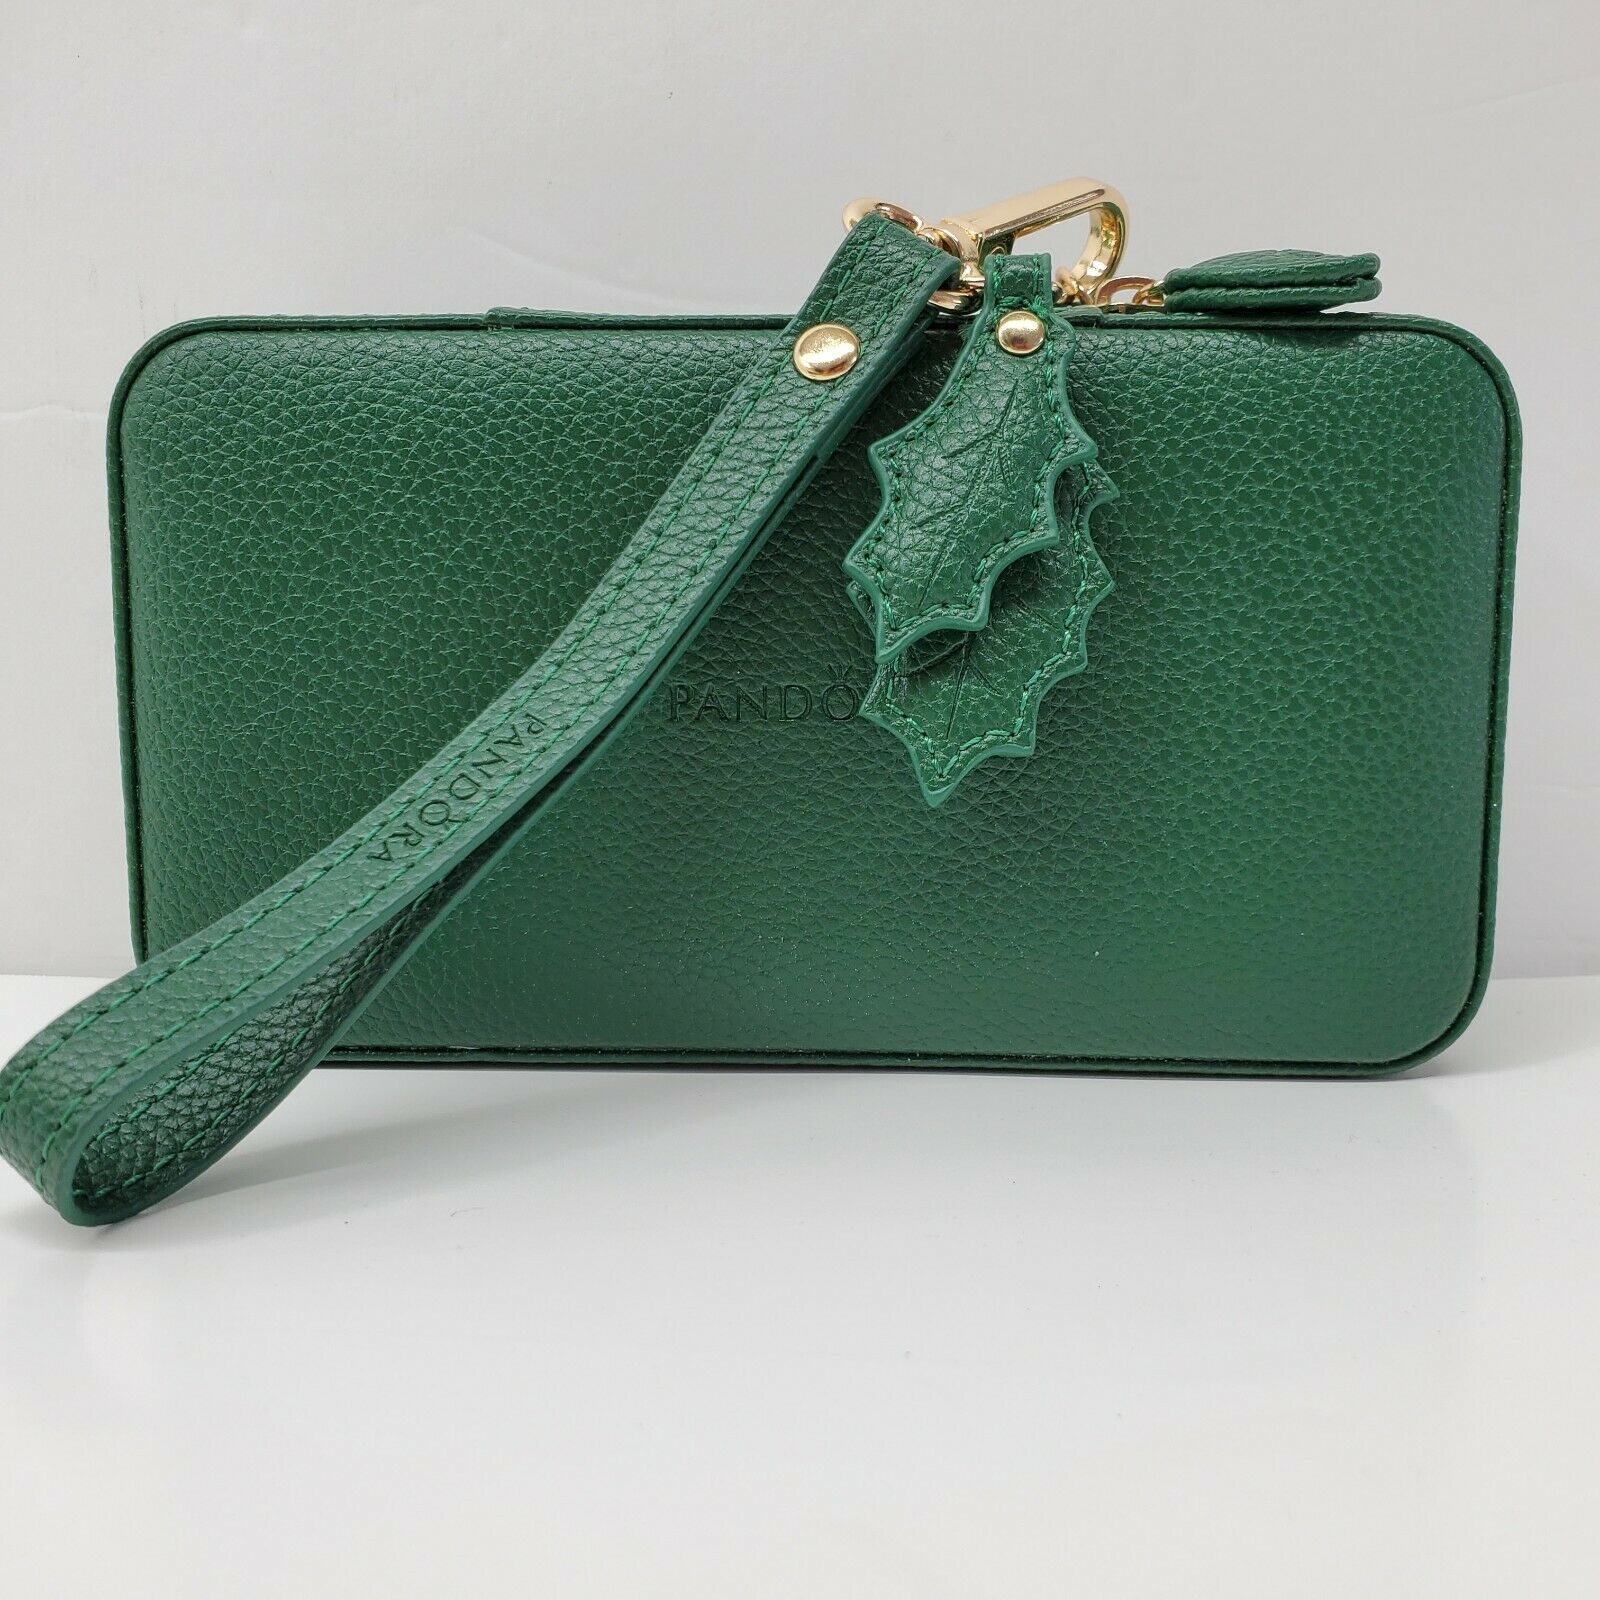 Genuine PANDORA Travel JEWELRY Green Leather CASE Rings/Charm/Bracelet ...